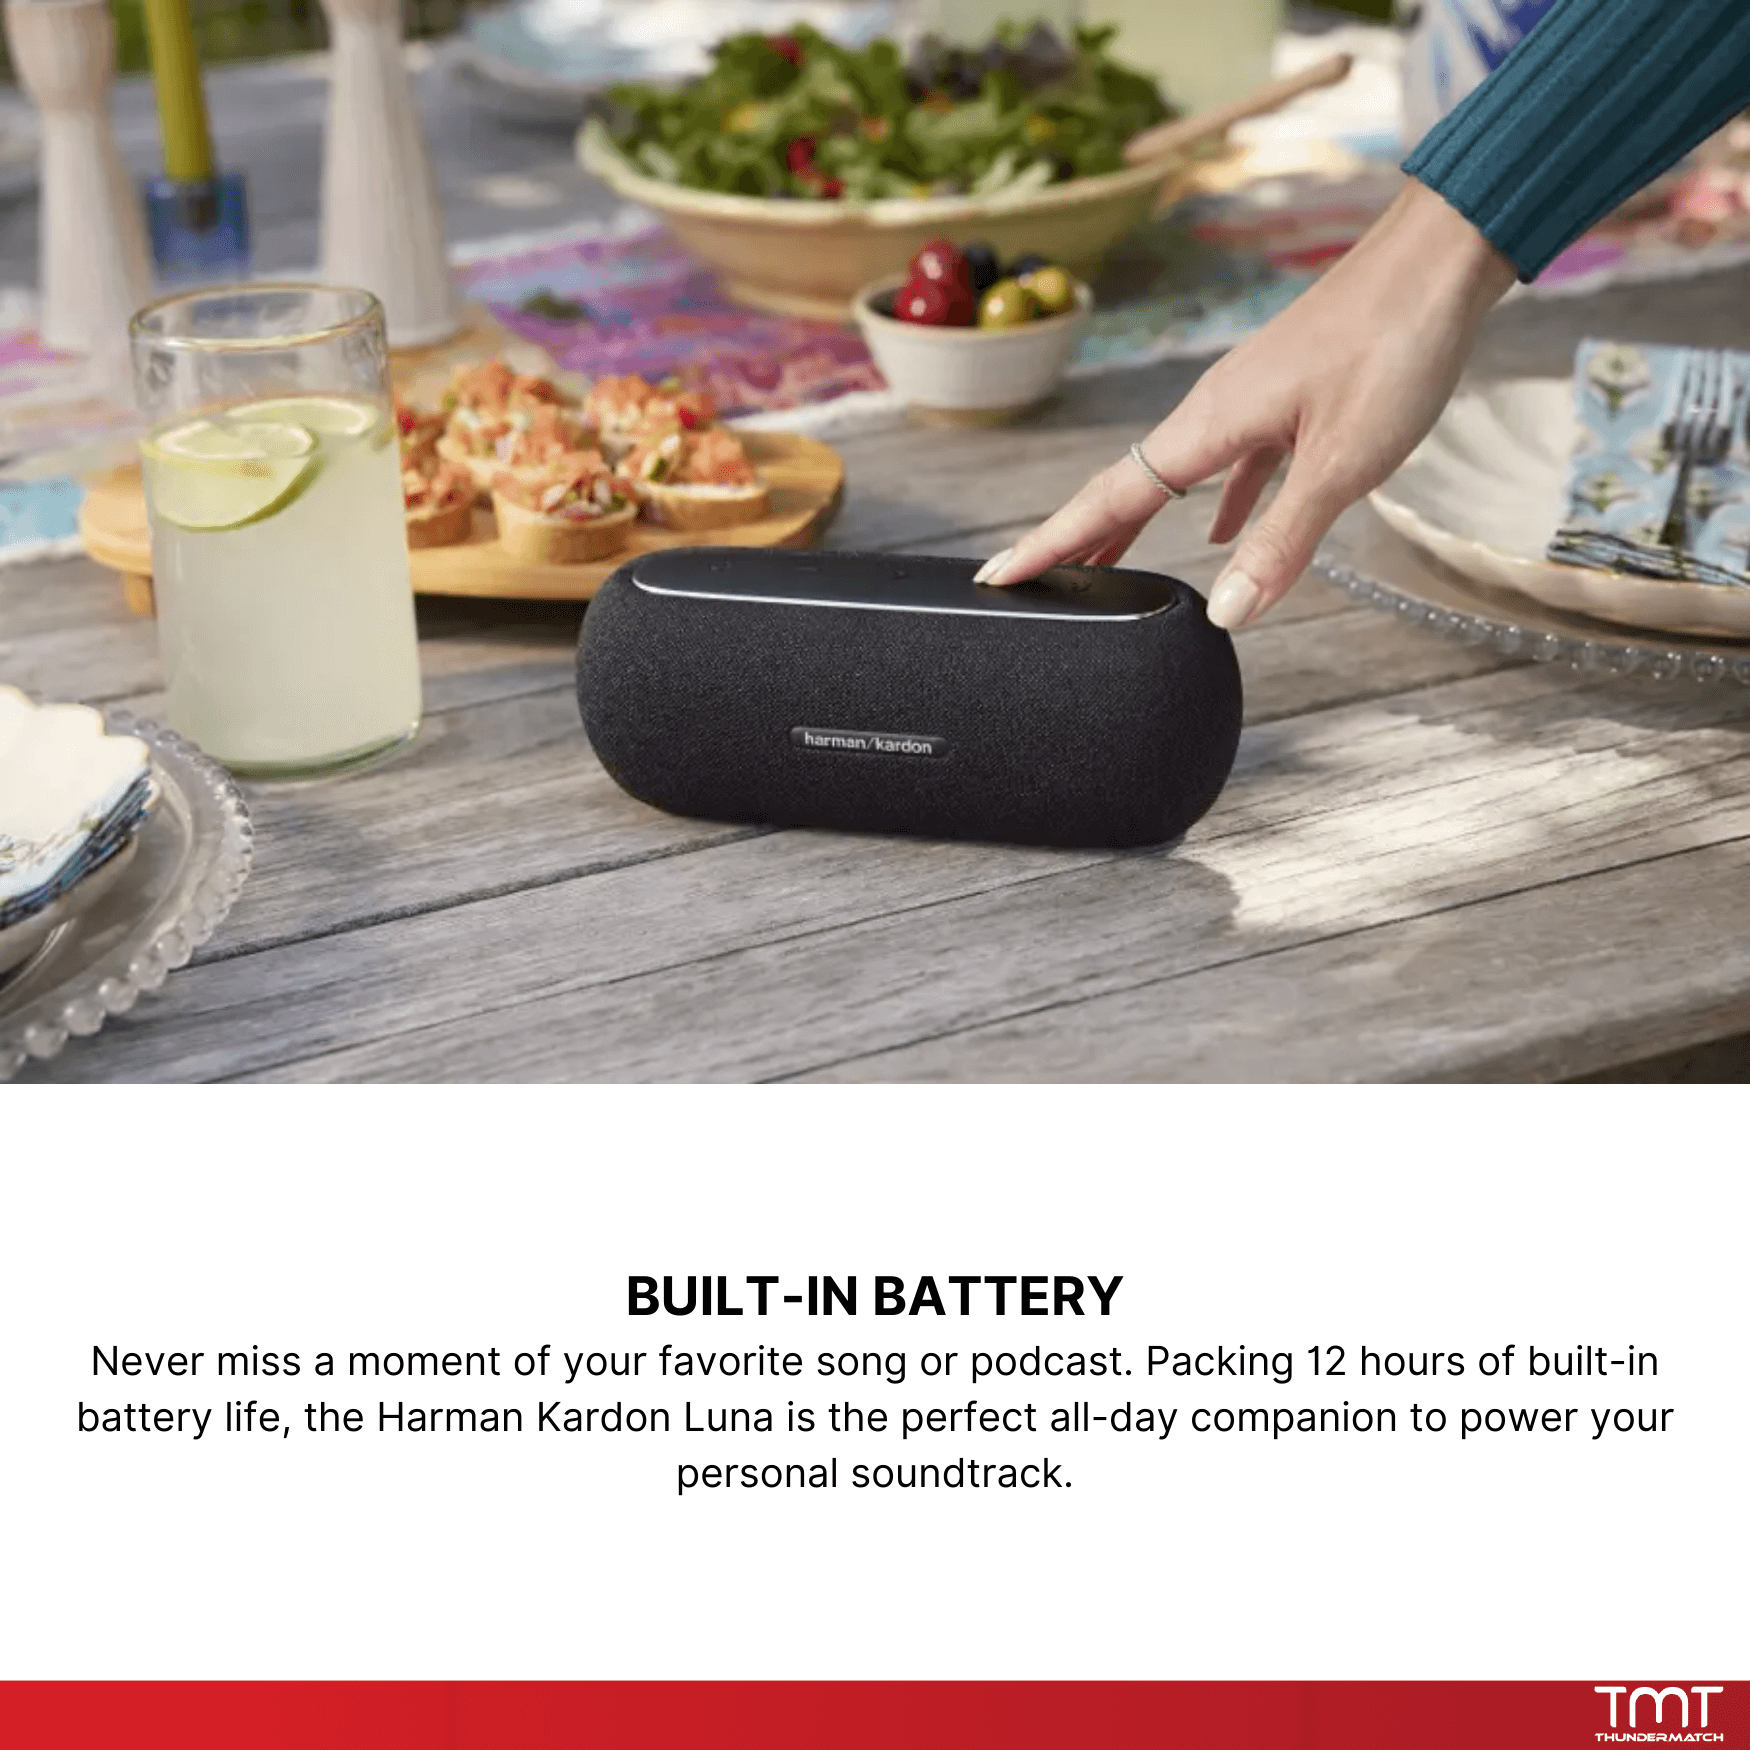 Harman Kardon Luna Elegant Portable Bluetooth Speaker - Superior Sound | Up to 12 hours Battery Life (Black/Grey)